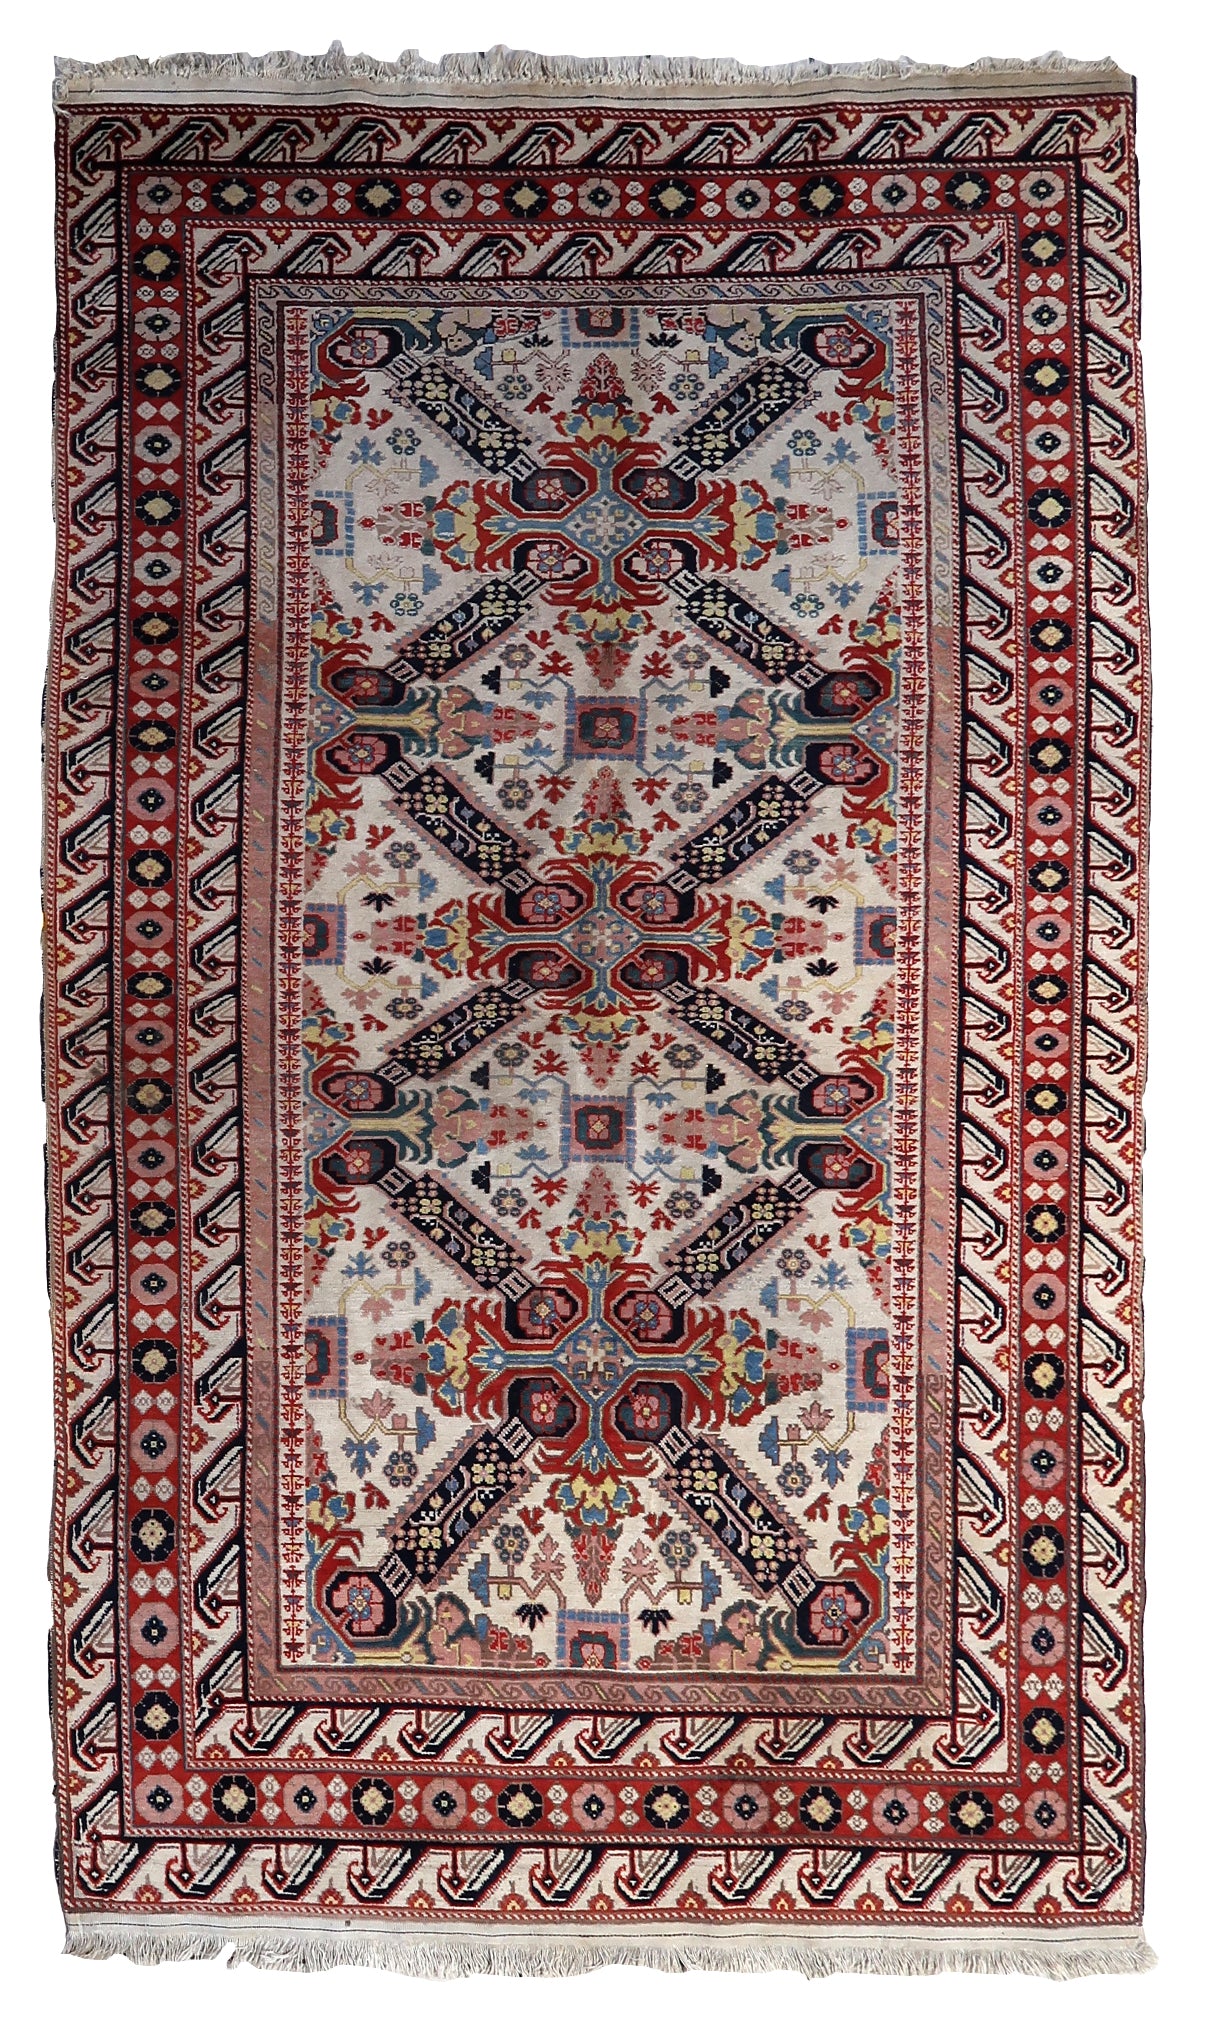 Handmade vintage Caucasian Zeyhur rug with vibrant design on white background